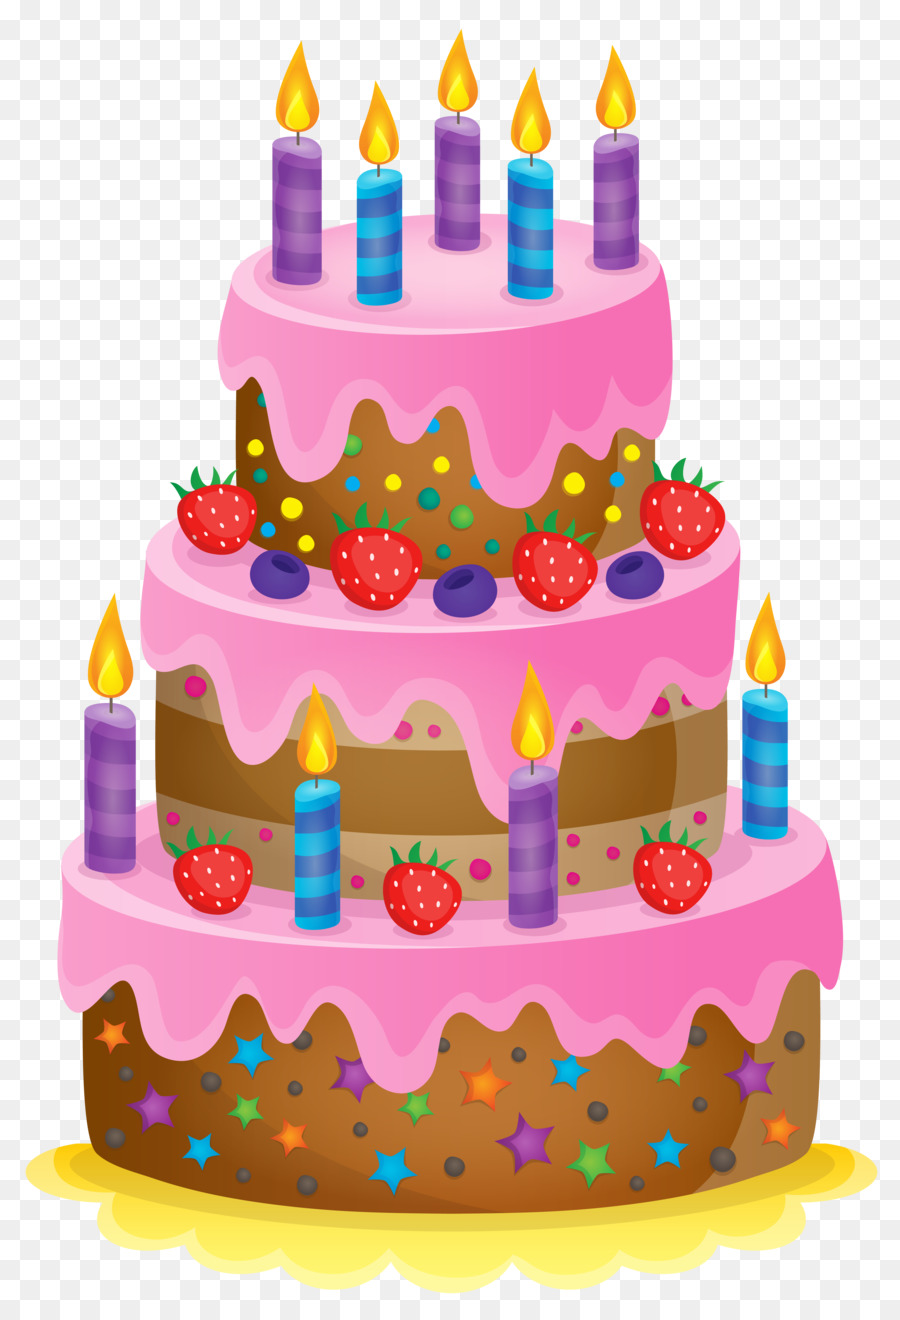 Birthday cake Cupcake Chocolate cake Muffin Strawberry cream cake - Cute Cake Cliparts png download - 4307*6298 - Free Transparent Birthday Cake png Download.